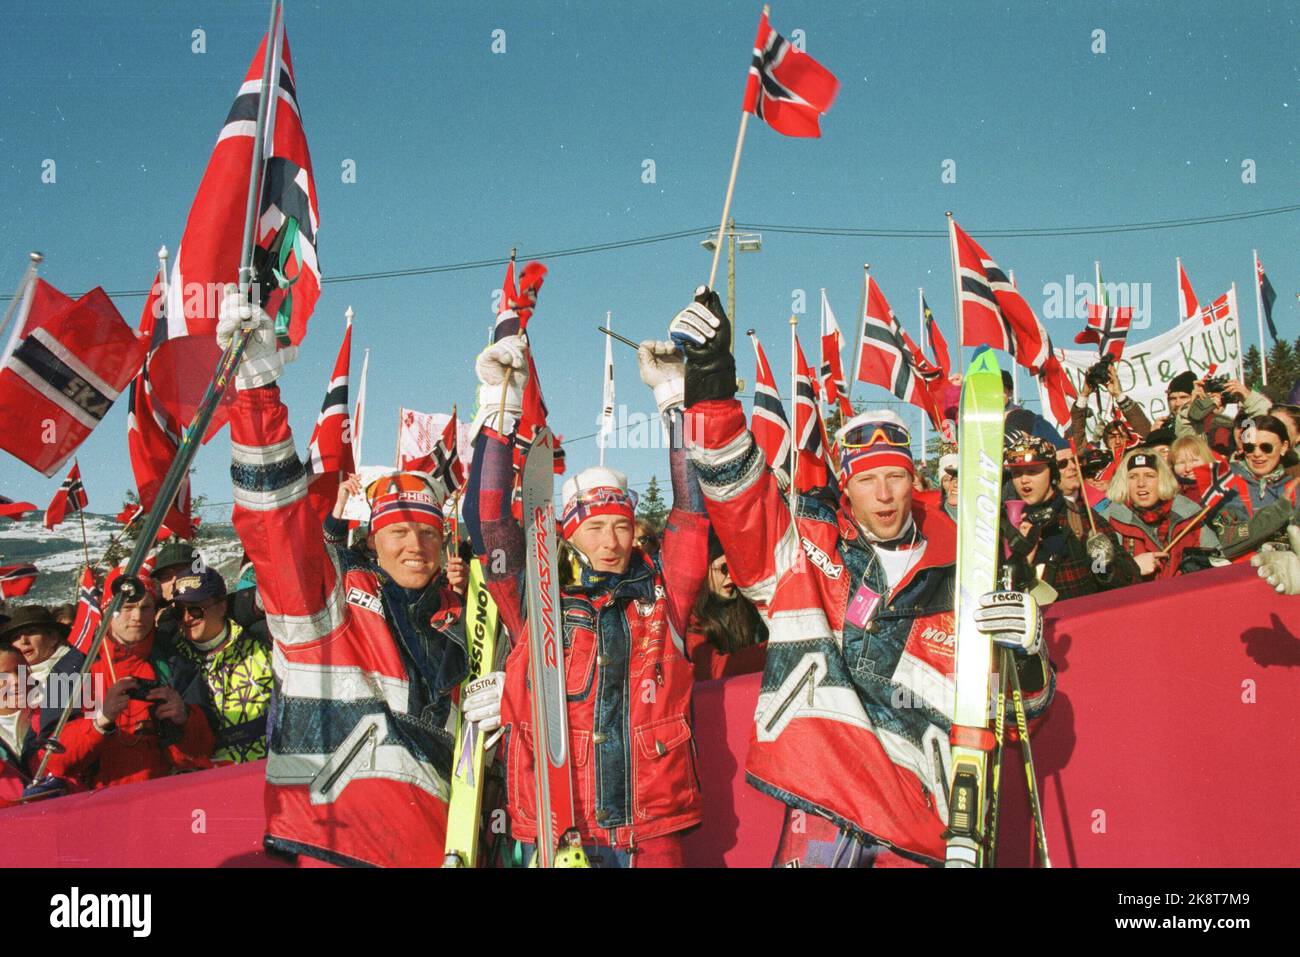 Hafjell, 19940225: Olimpiadi invernali a Lillehammer. I vincitori in combinazione slalom. Per esempio: Harald Christian Strand Nilsen, Kjetil Andre Aamodt, Lasse Kjus. - Norwegian cheer - Norwegian flag - Norwegian winning trio. NTB Foto: Calle Tørnstrøm / NTB Foto Stock